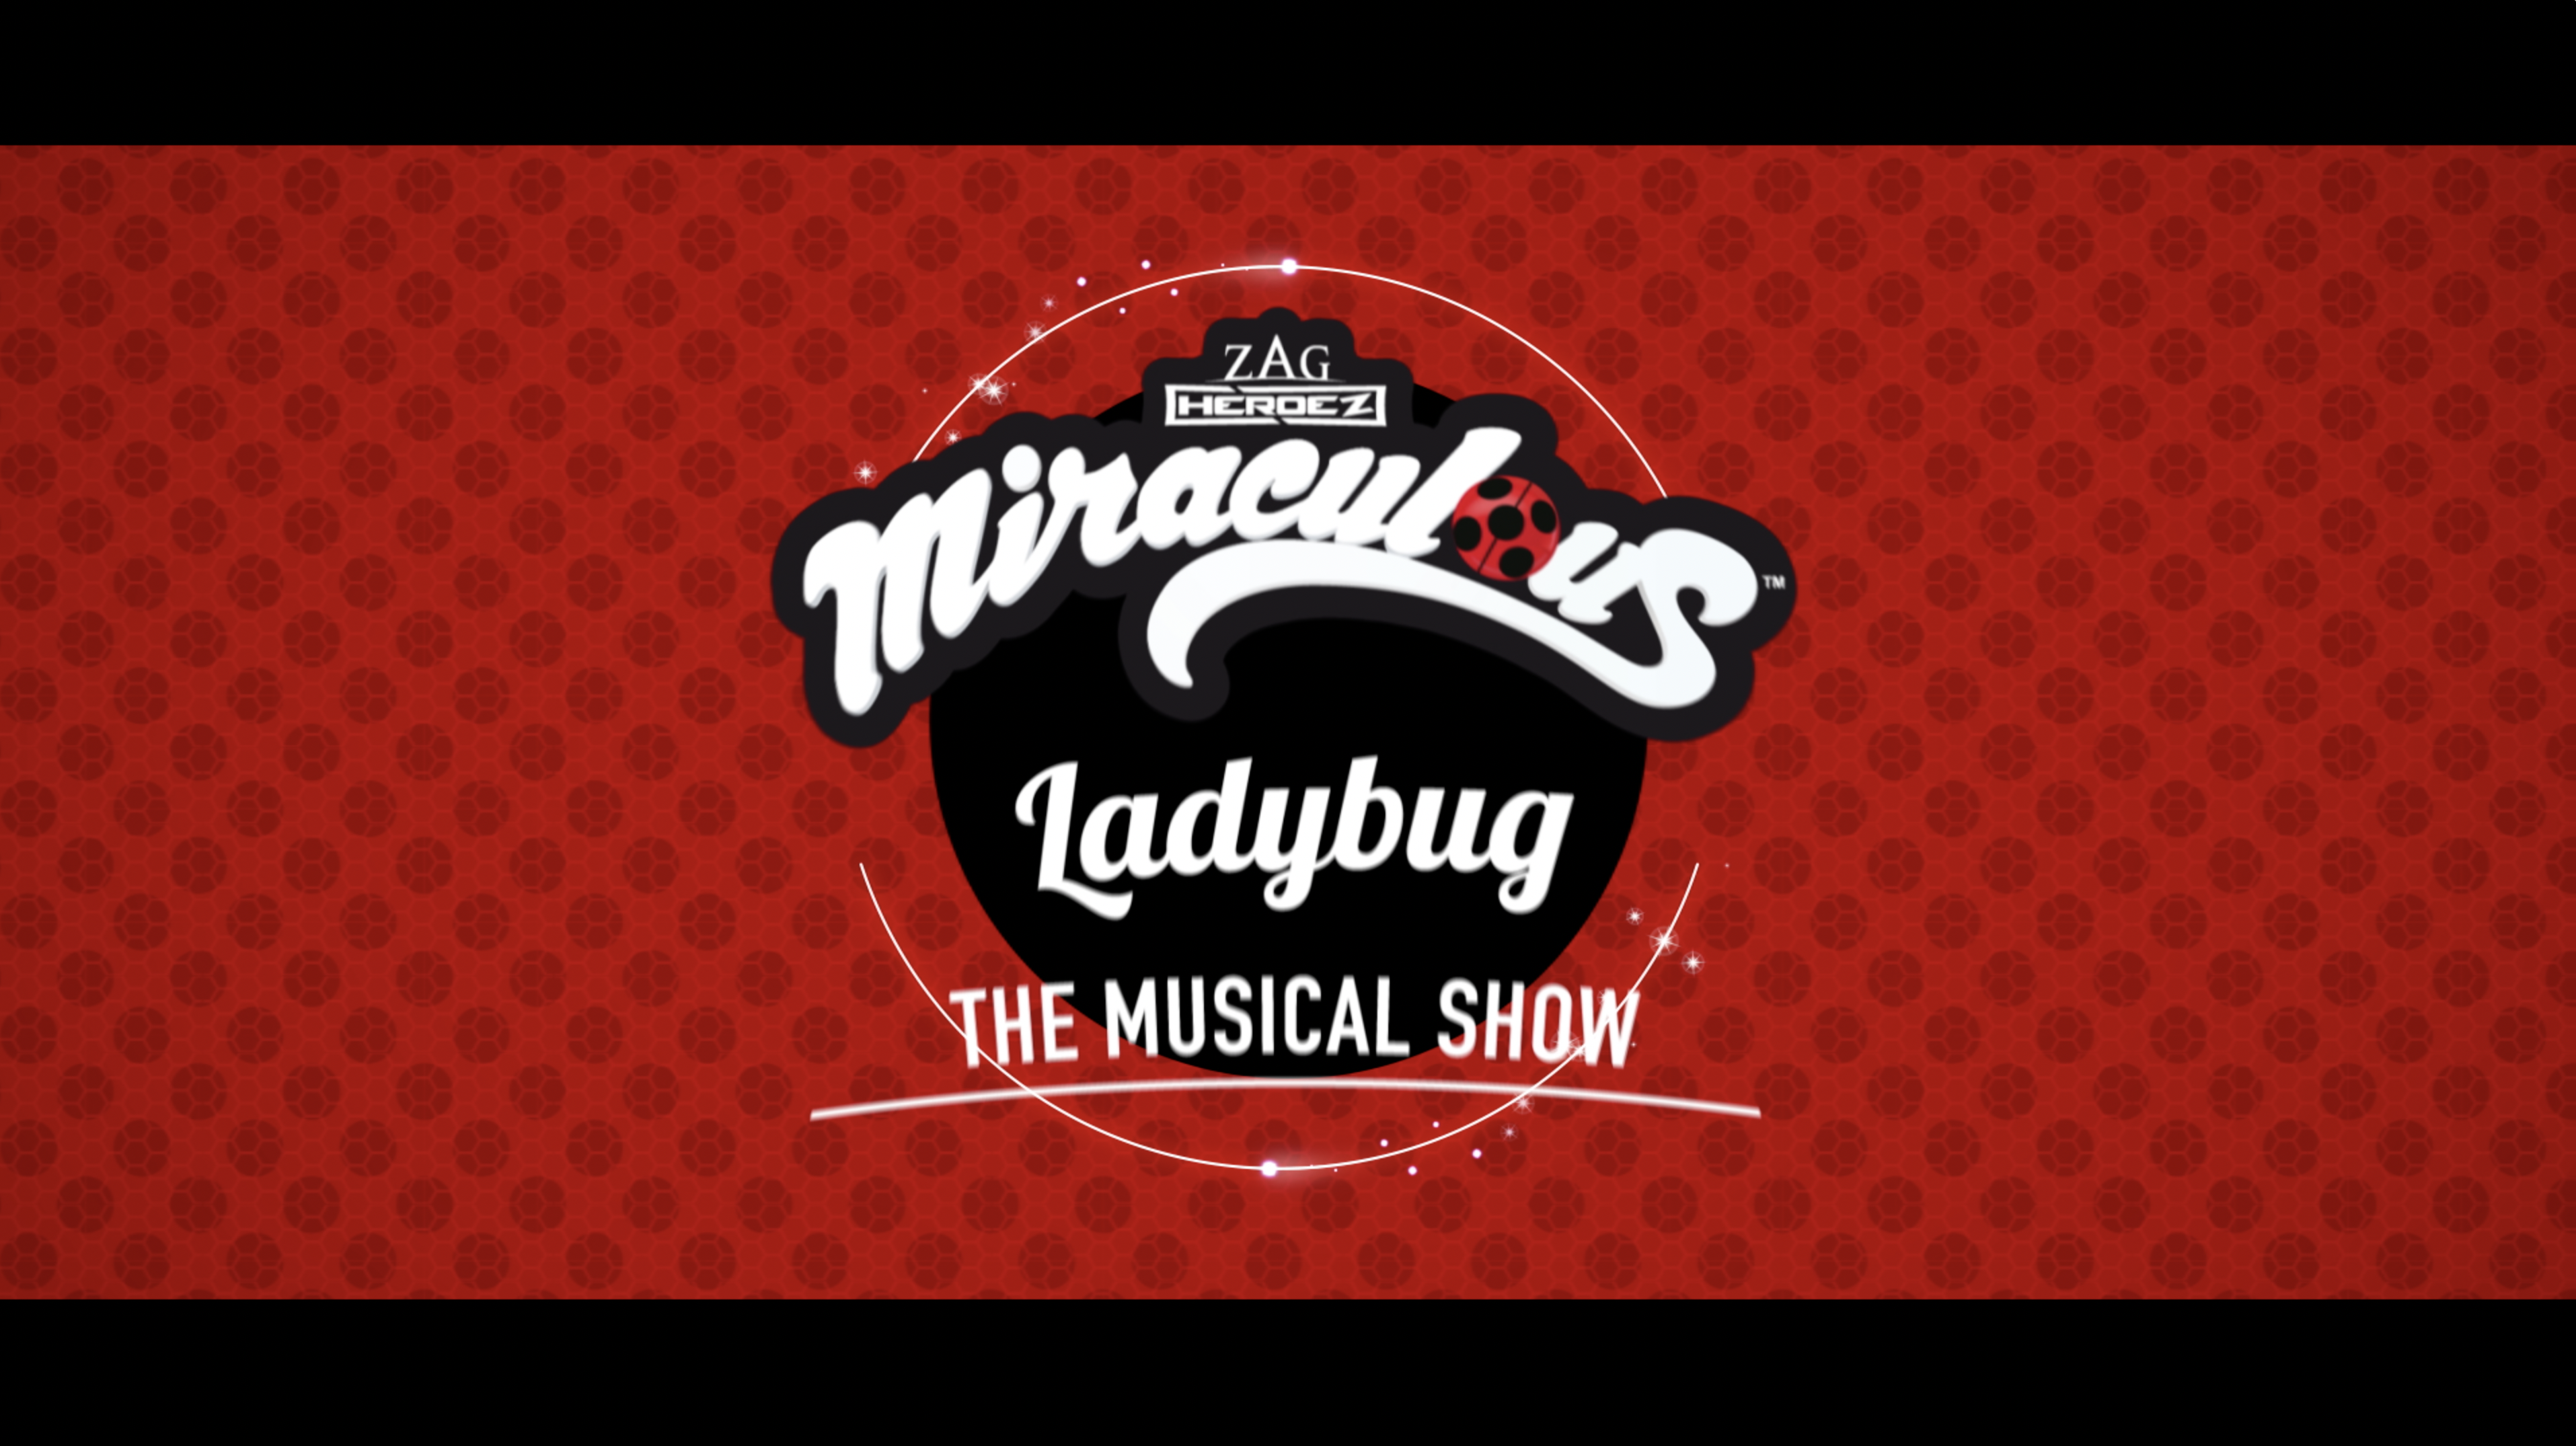 Gagnez vos places pour Miraculous LadyBug, le spectacle musical - Radio  Scoop